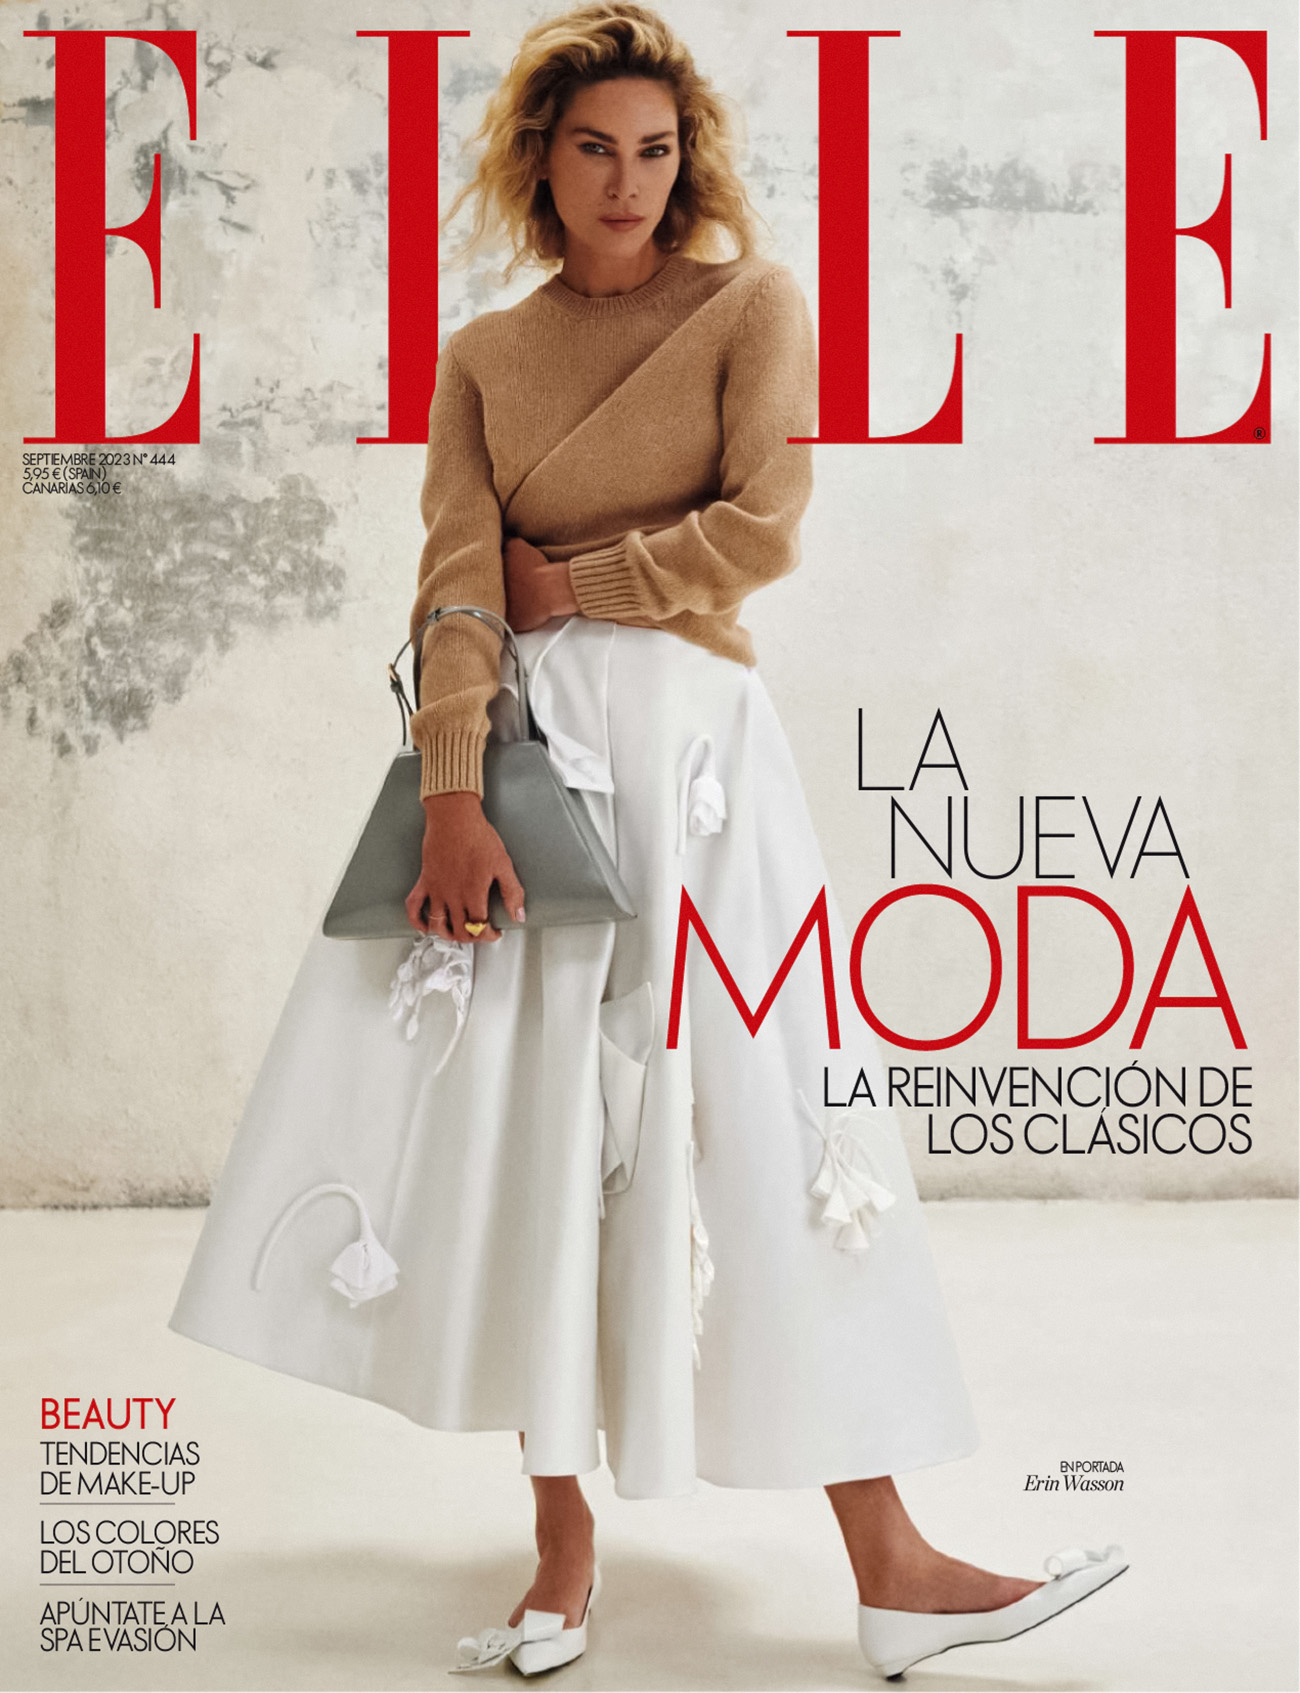 Erin Wasson covers Elle Spain September 2023 by Javier Lopez